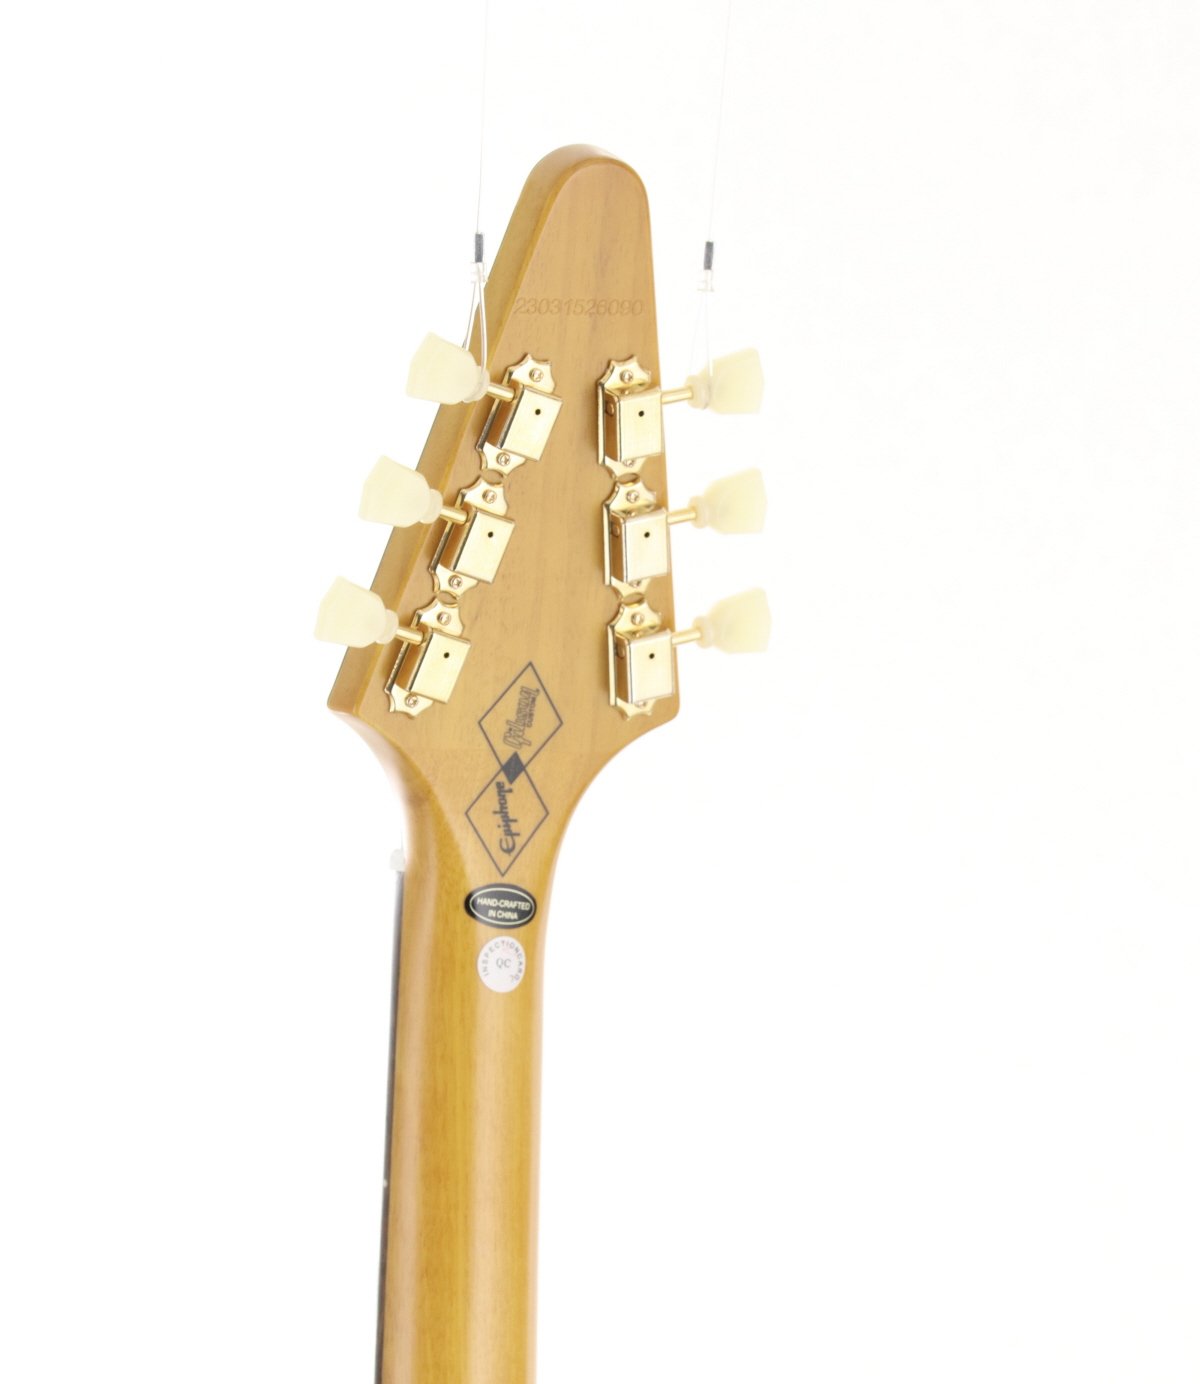 [SN 23031526090] USED EPIPHONE / Inspired by Gibson Custom 1958 Korina Flying V LH [10]